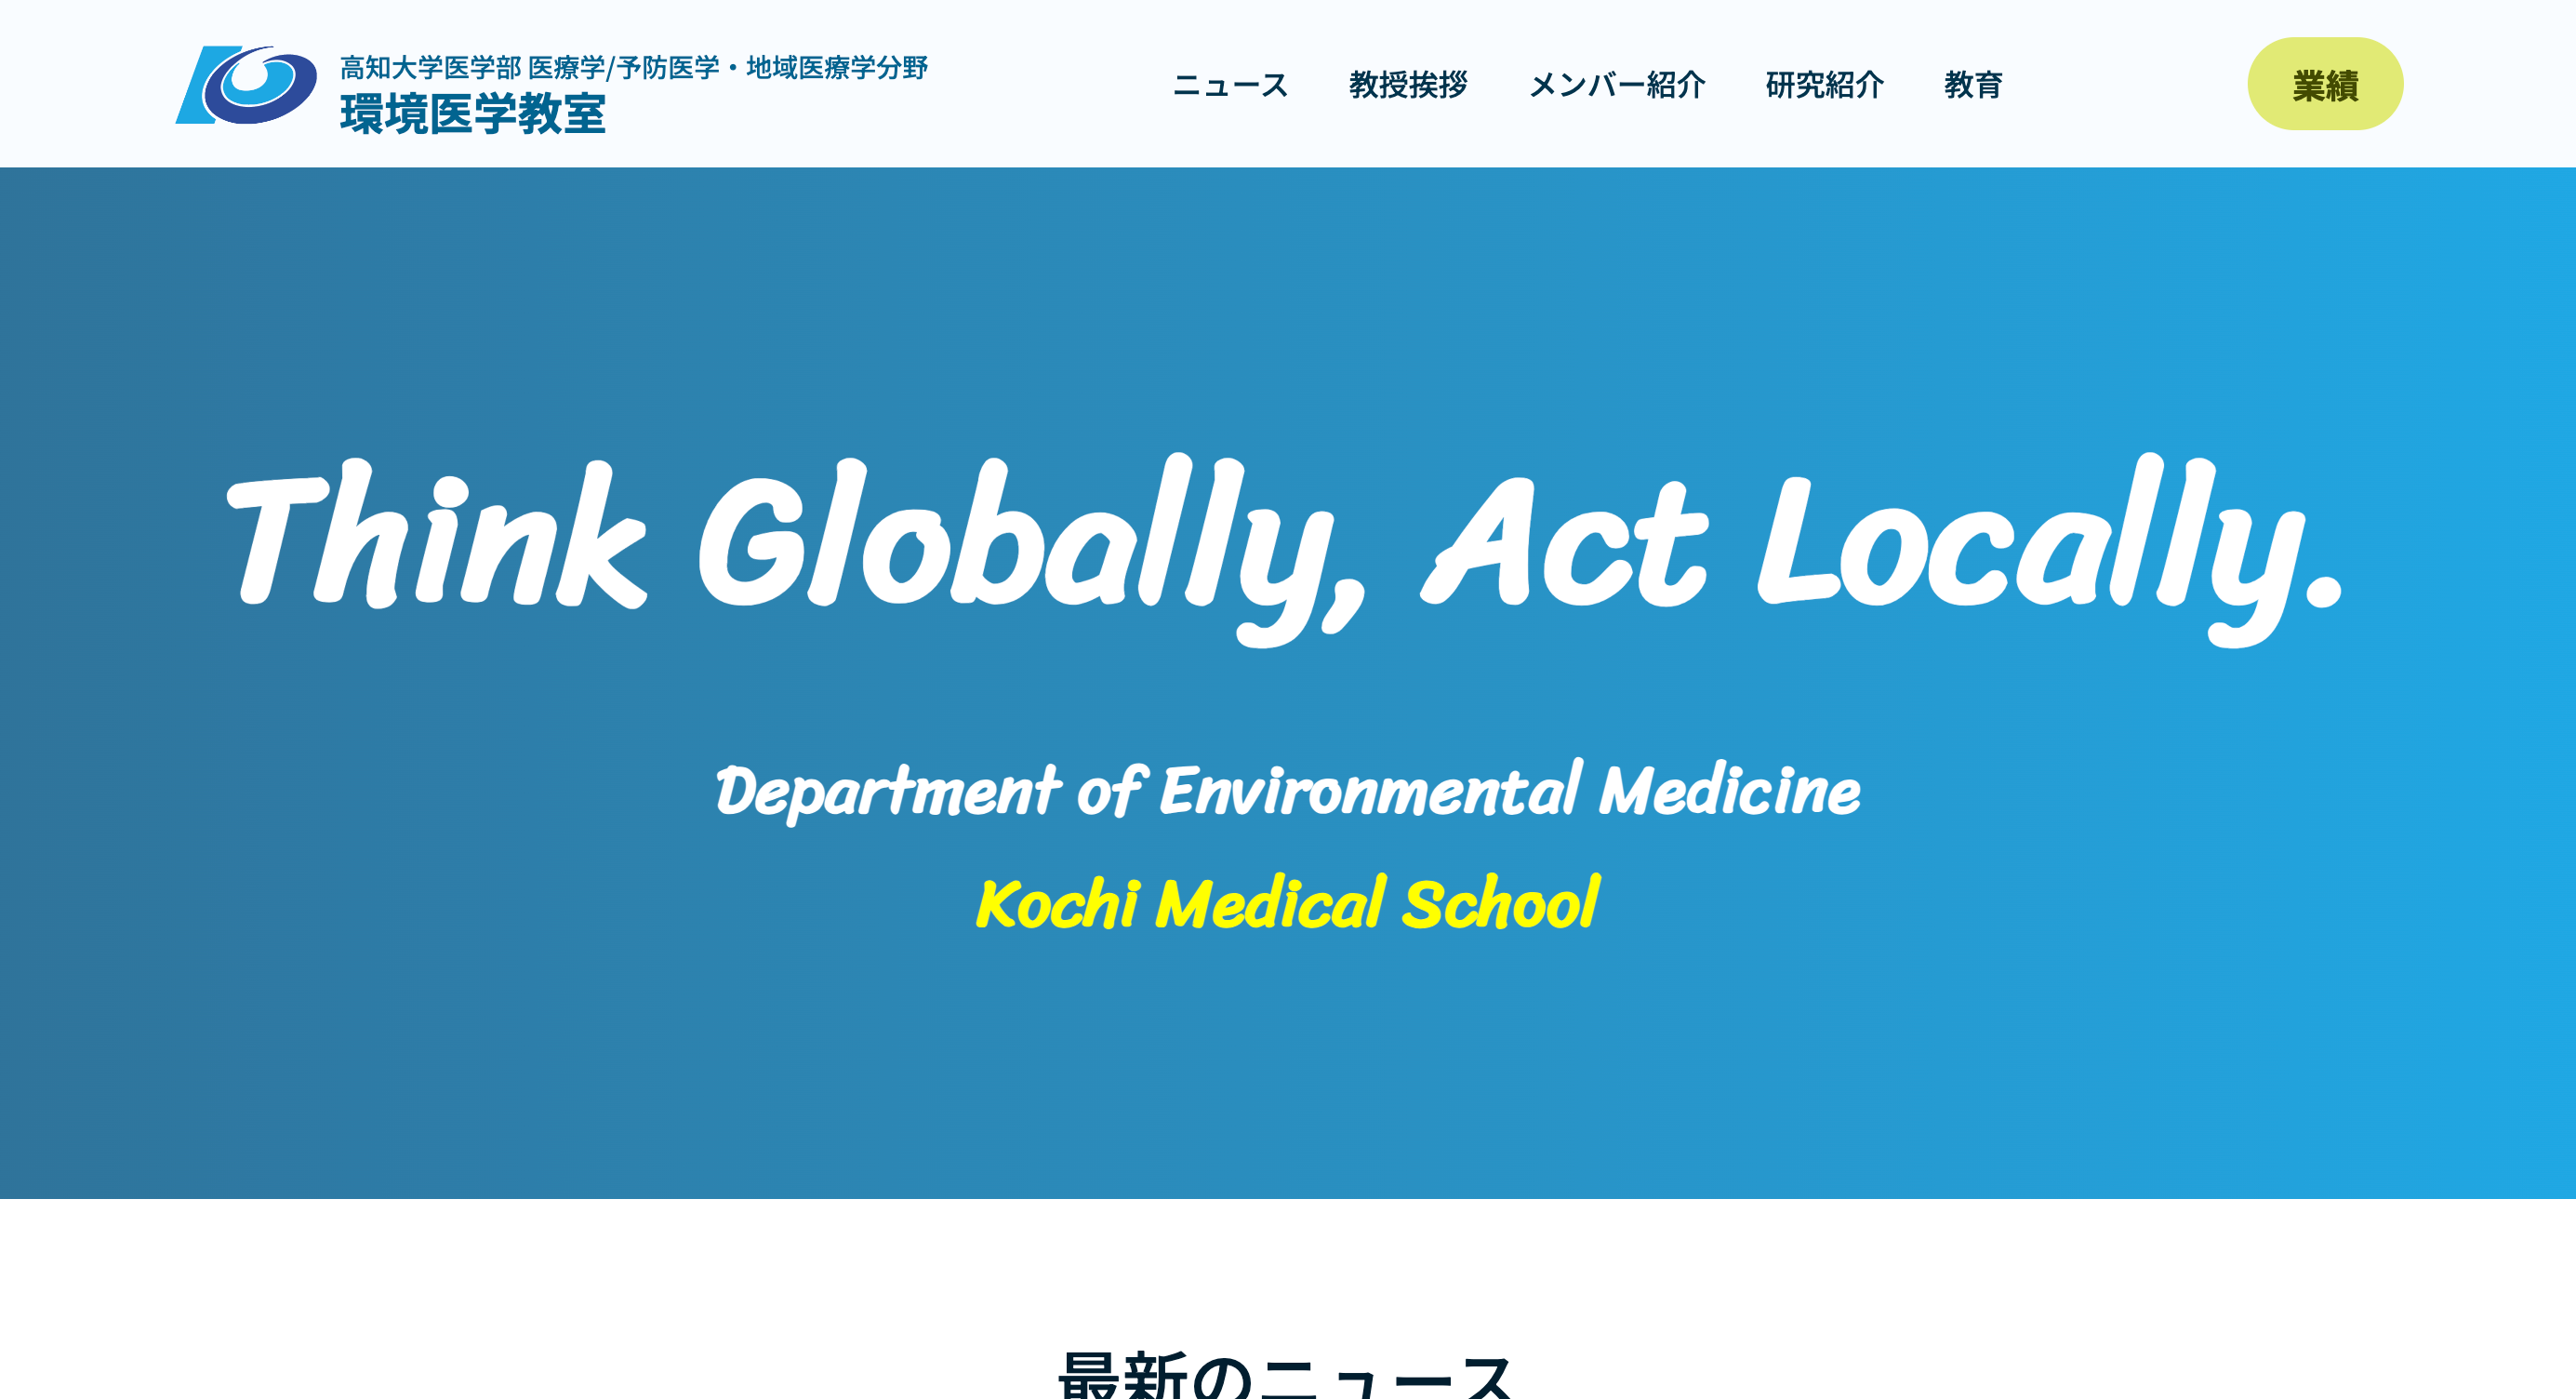 Kochi Medical School Department of Environmental Medicine